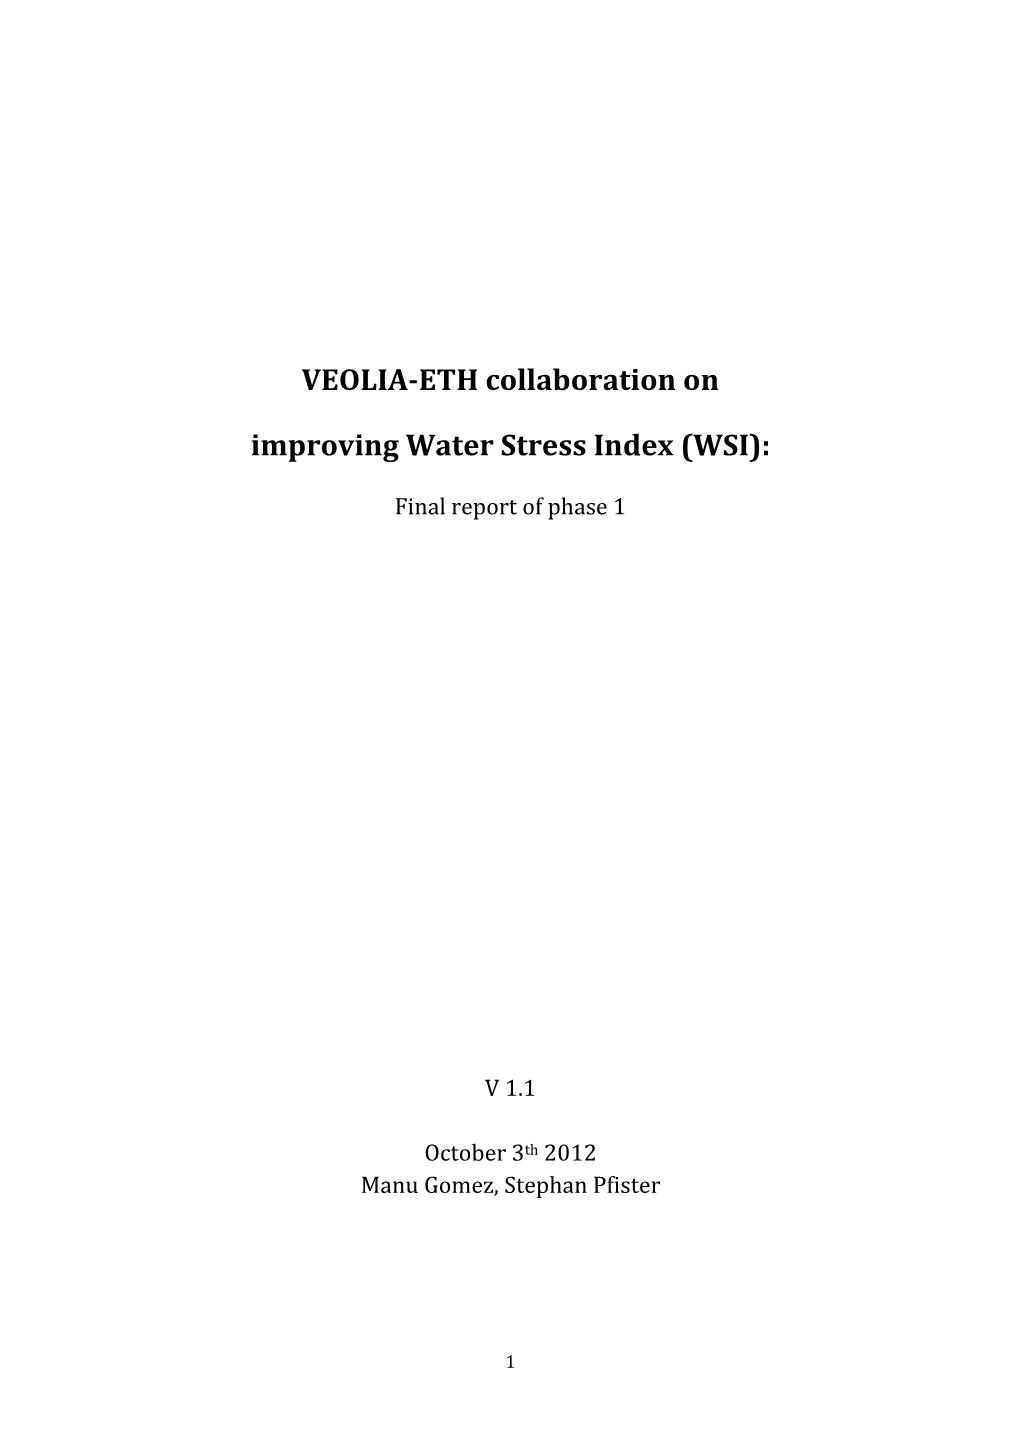 VEOLIA-ETH Collaboration on Improving Water Stress Index (WSI)